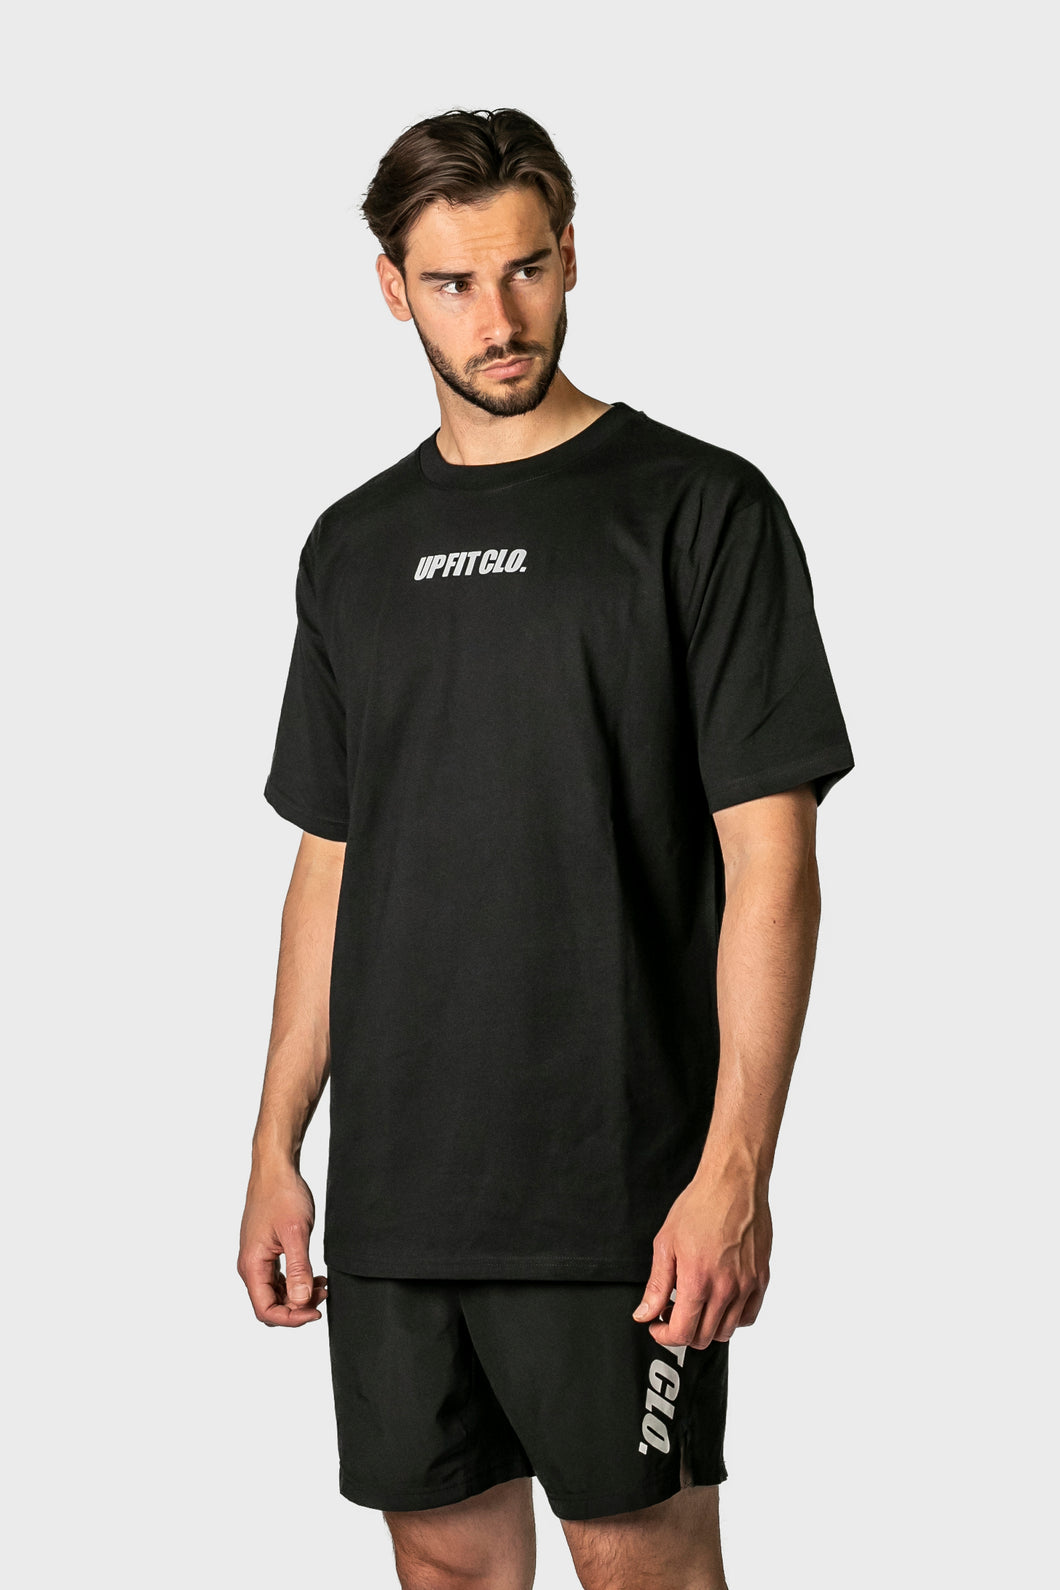 UPFITCLO. Oversized Shirt Reflective Black